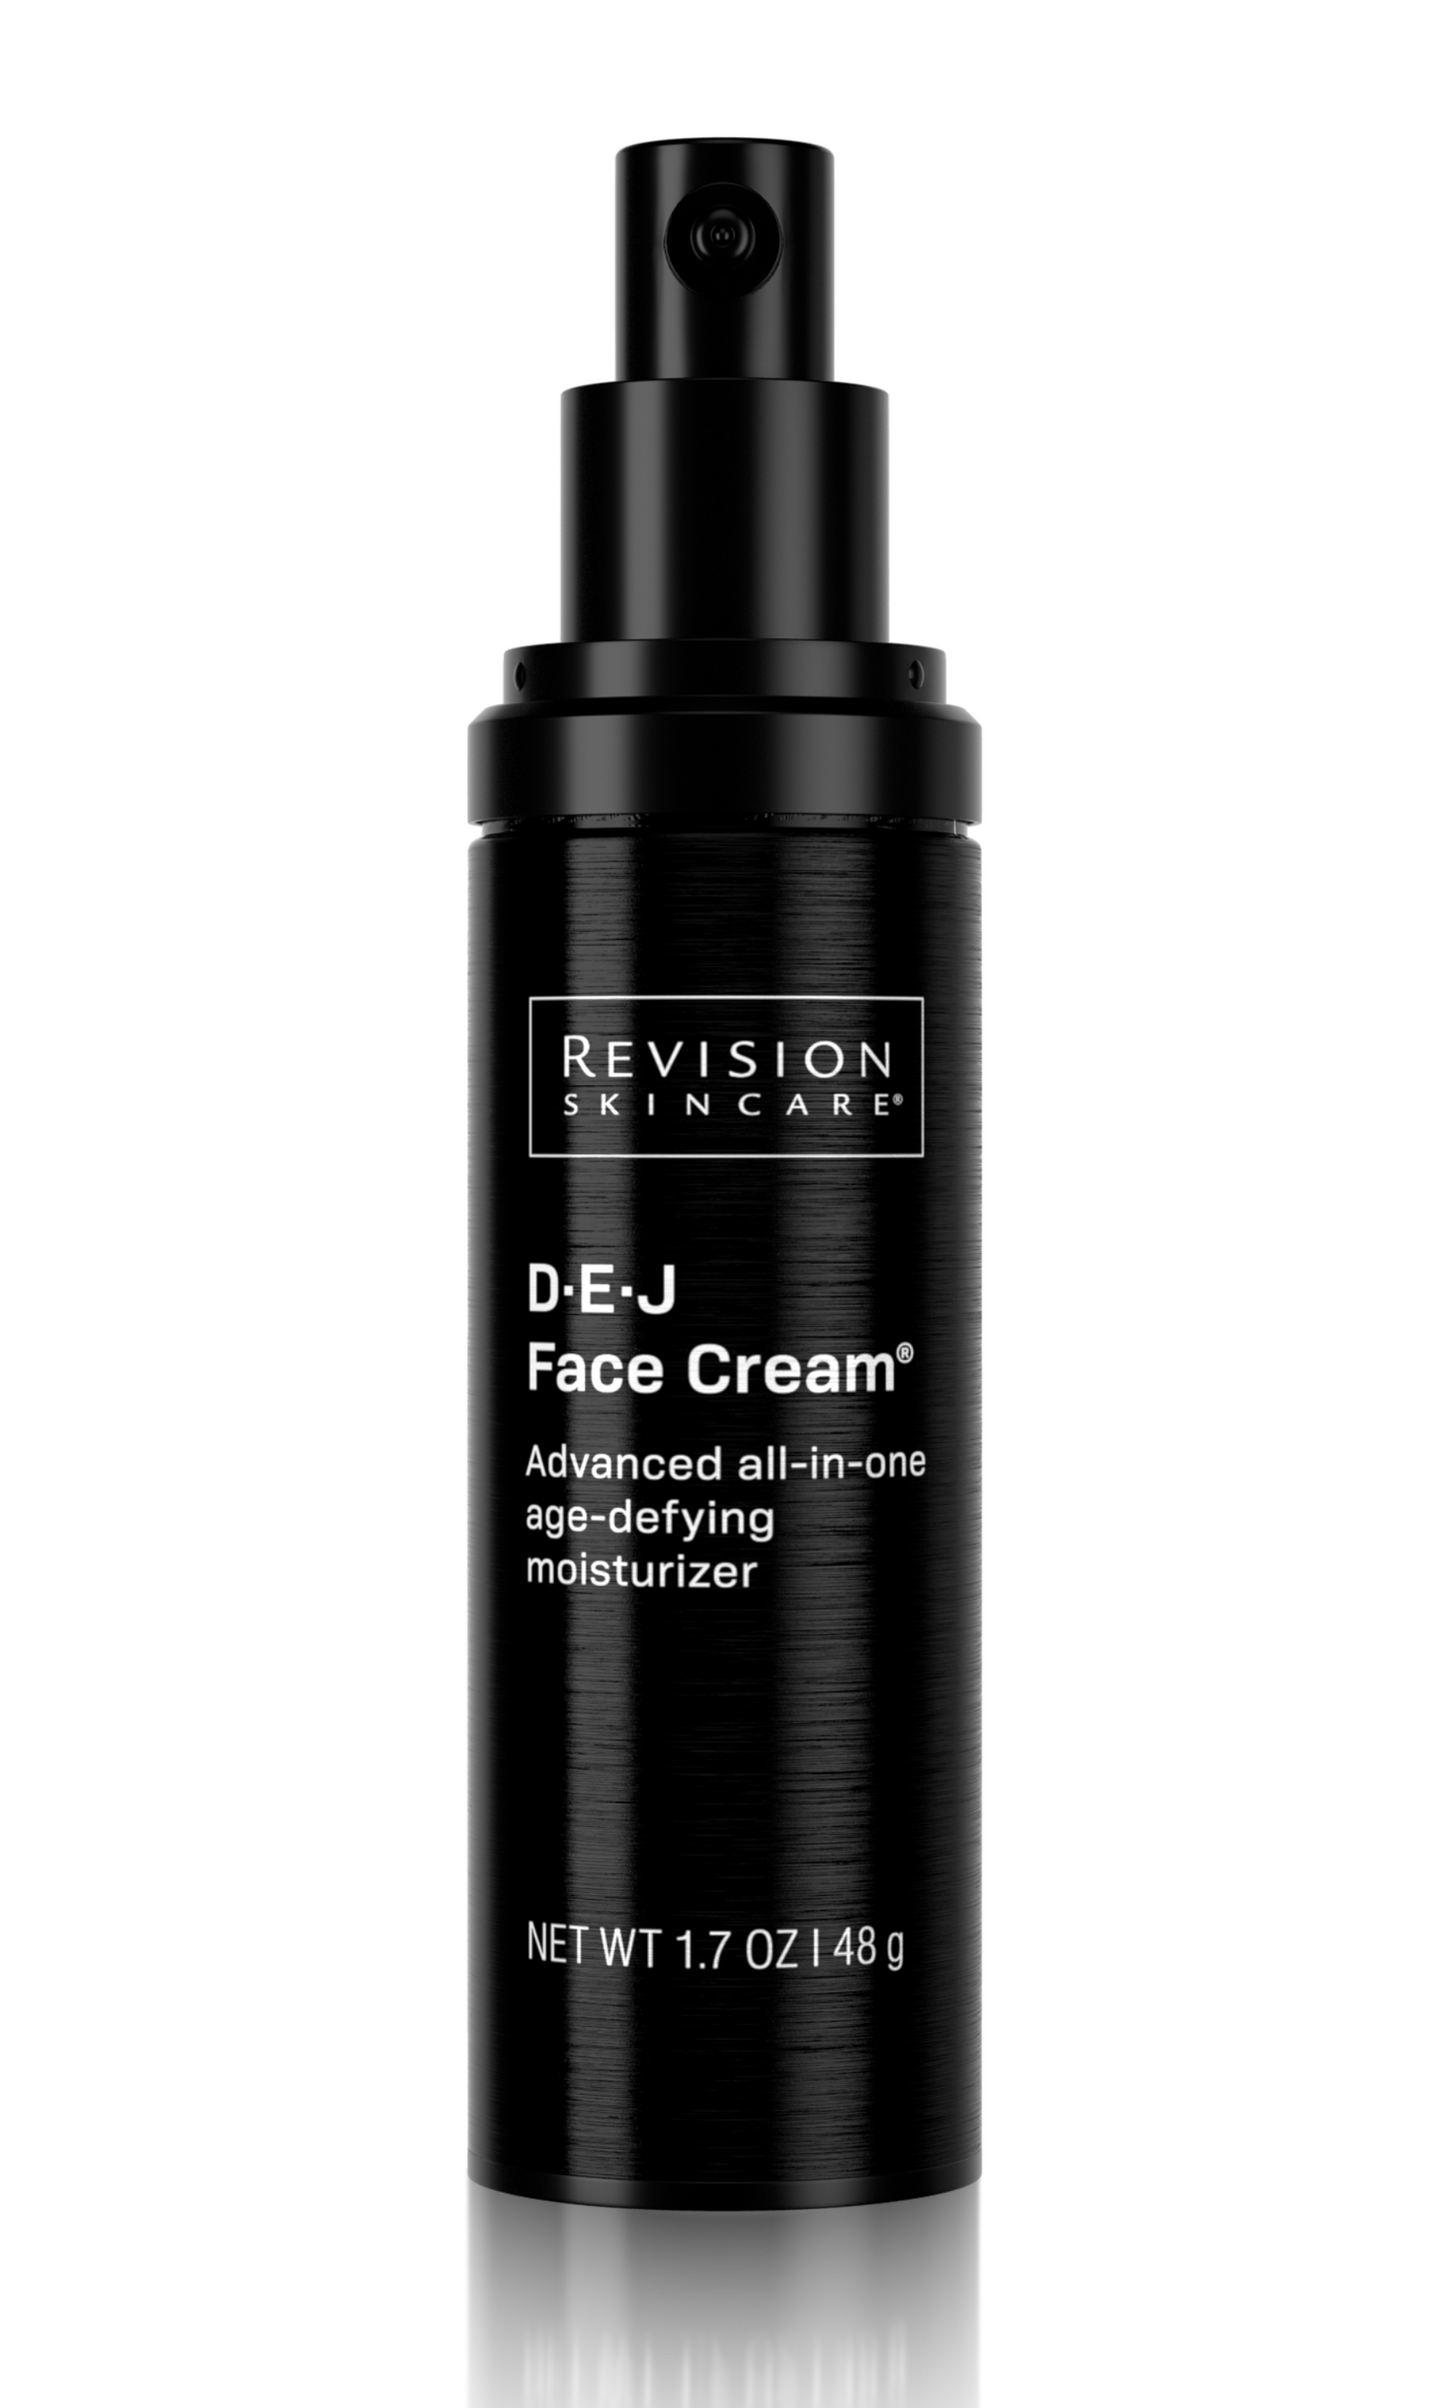 Revision D·E·J Face Cream®